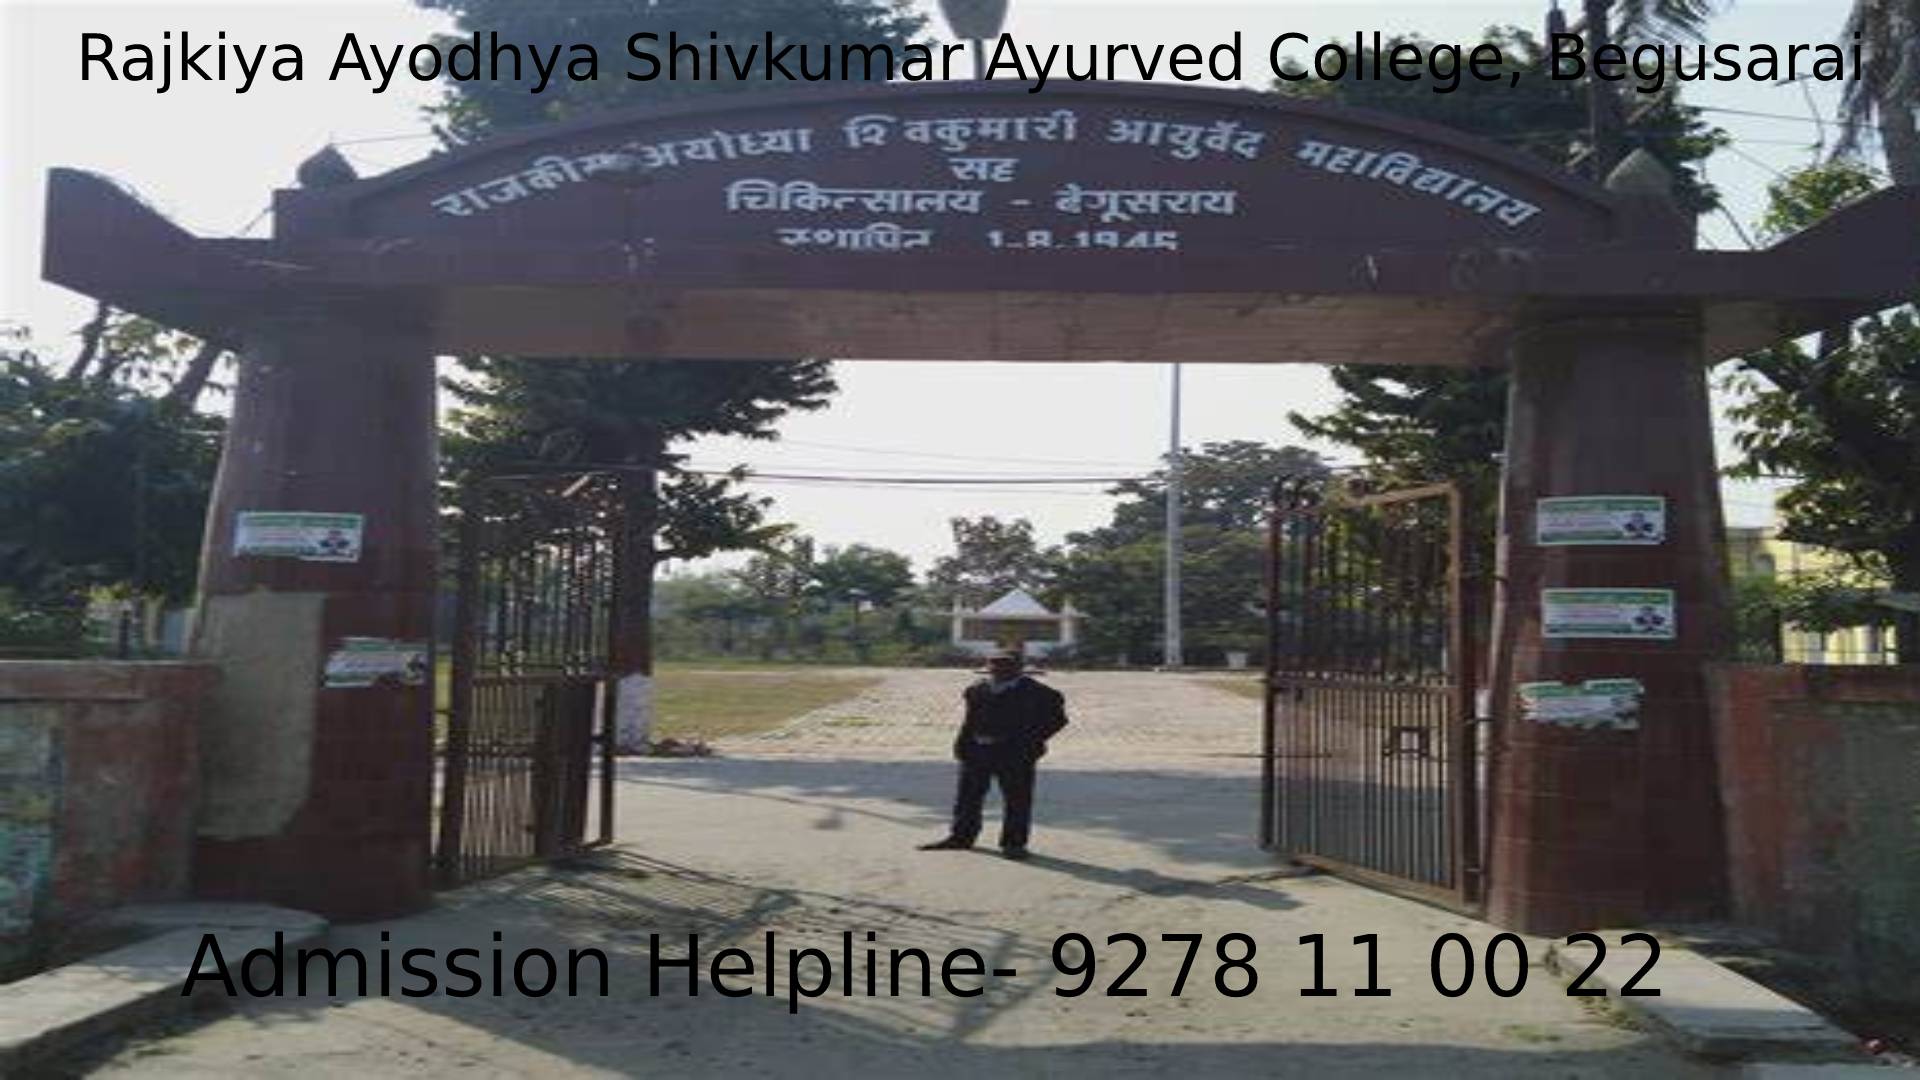 Rajkiya Ayodhya Shivkumar Ayurved College, Begusarai